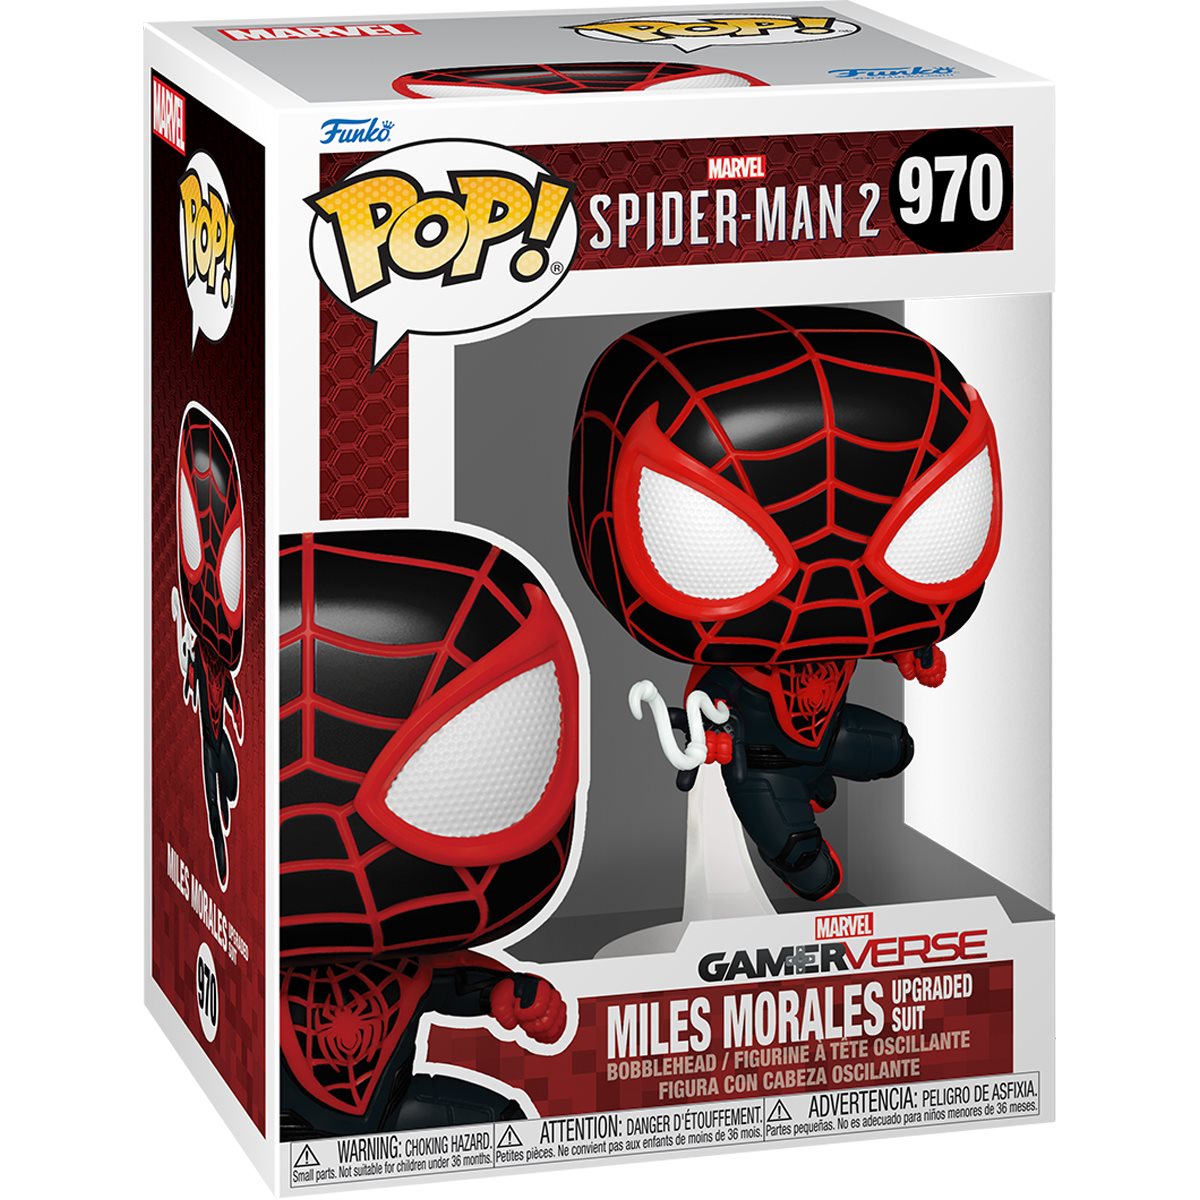 Spider-Man 2 Game Miles Morales Upgraded Suit Funko Pop! Vinyl Figure #970 Funko